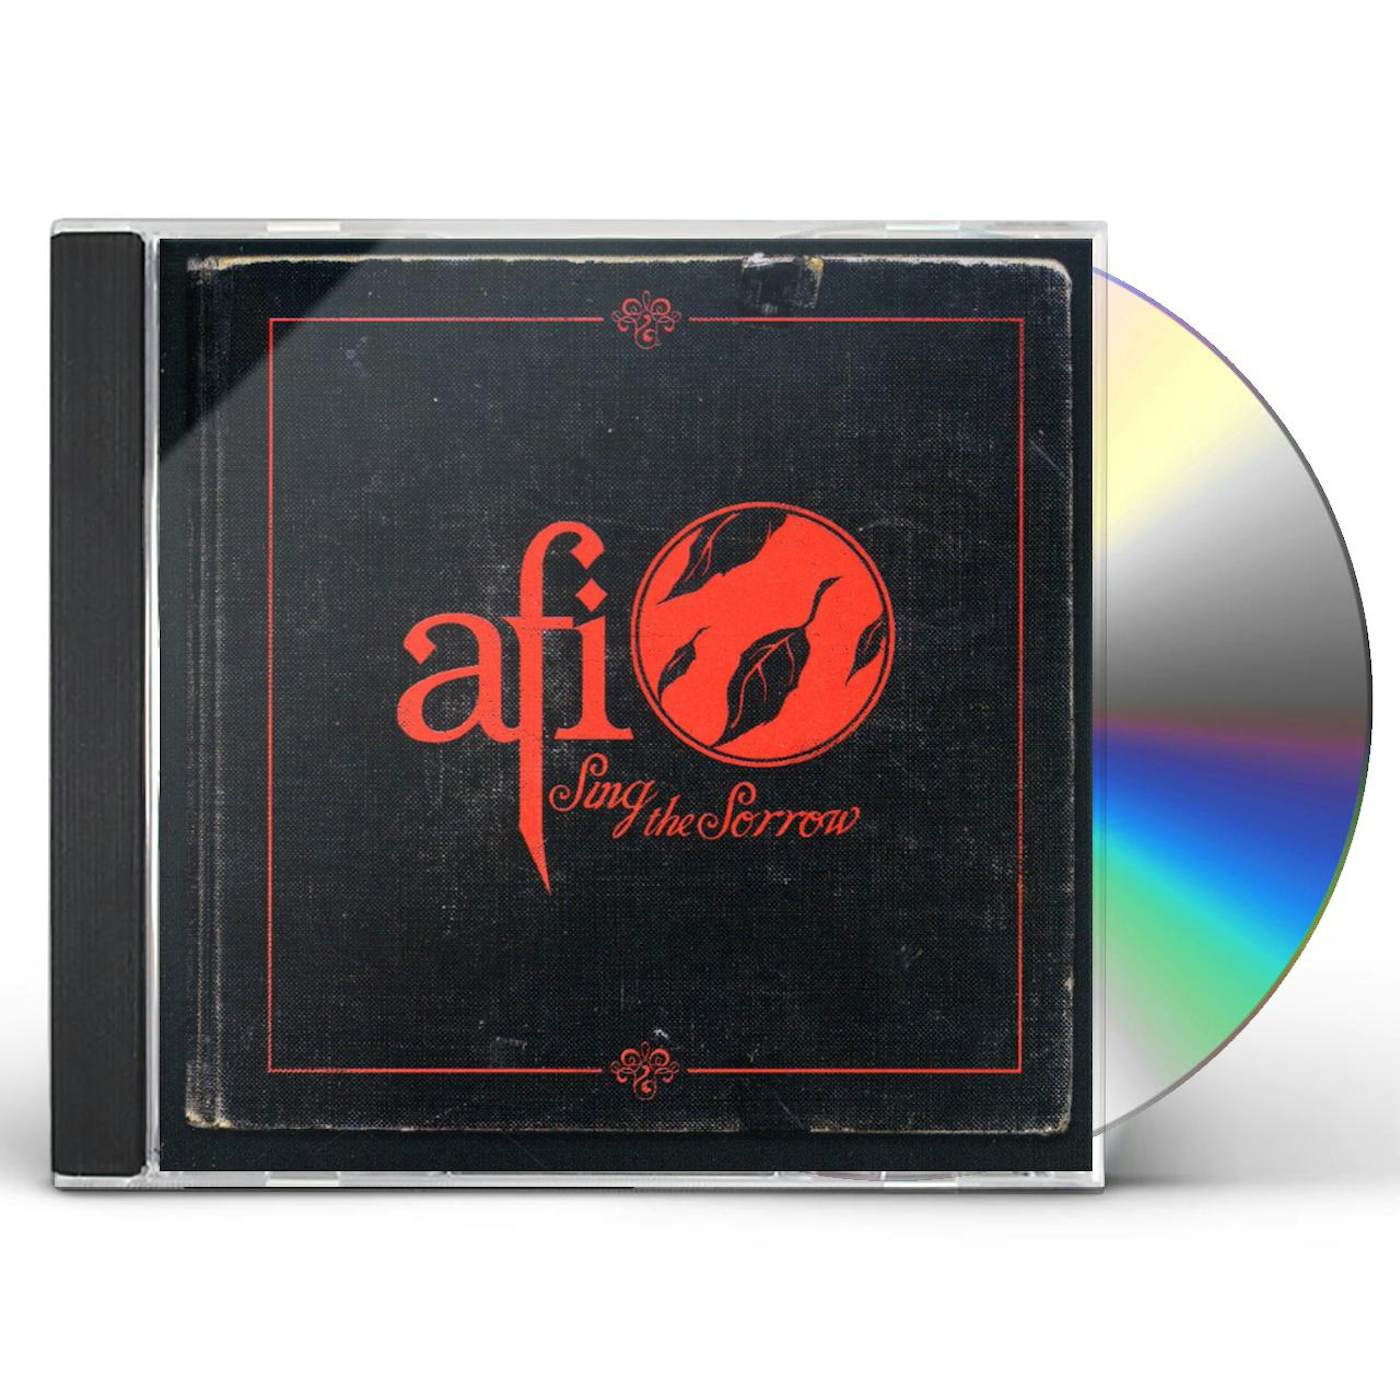 AFI SING SORROW CD